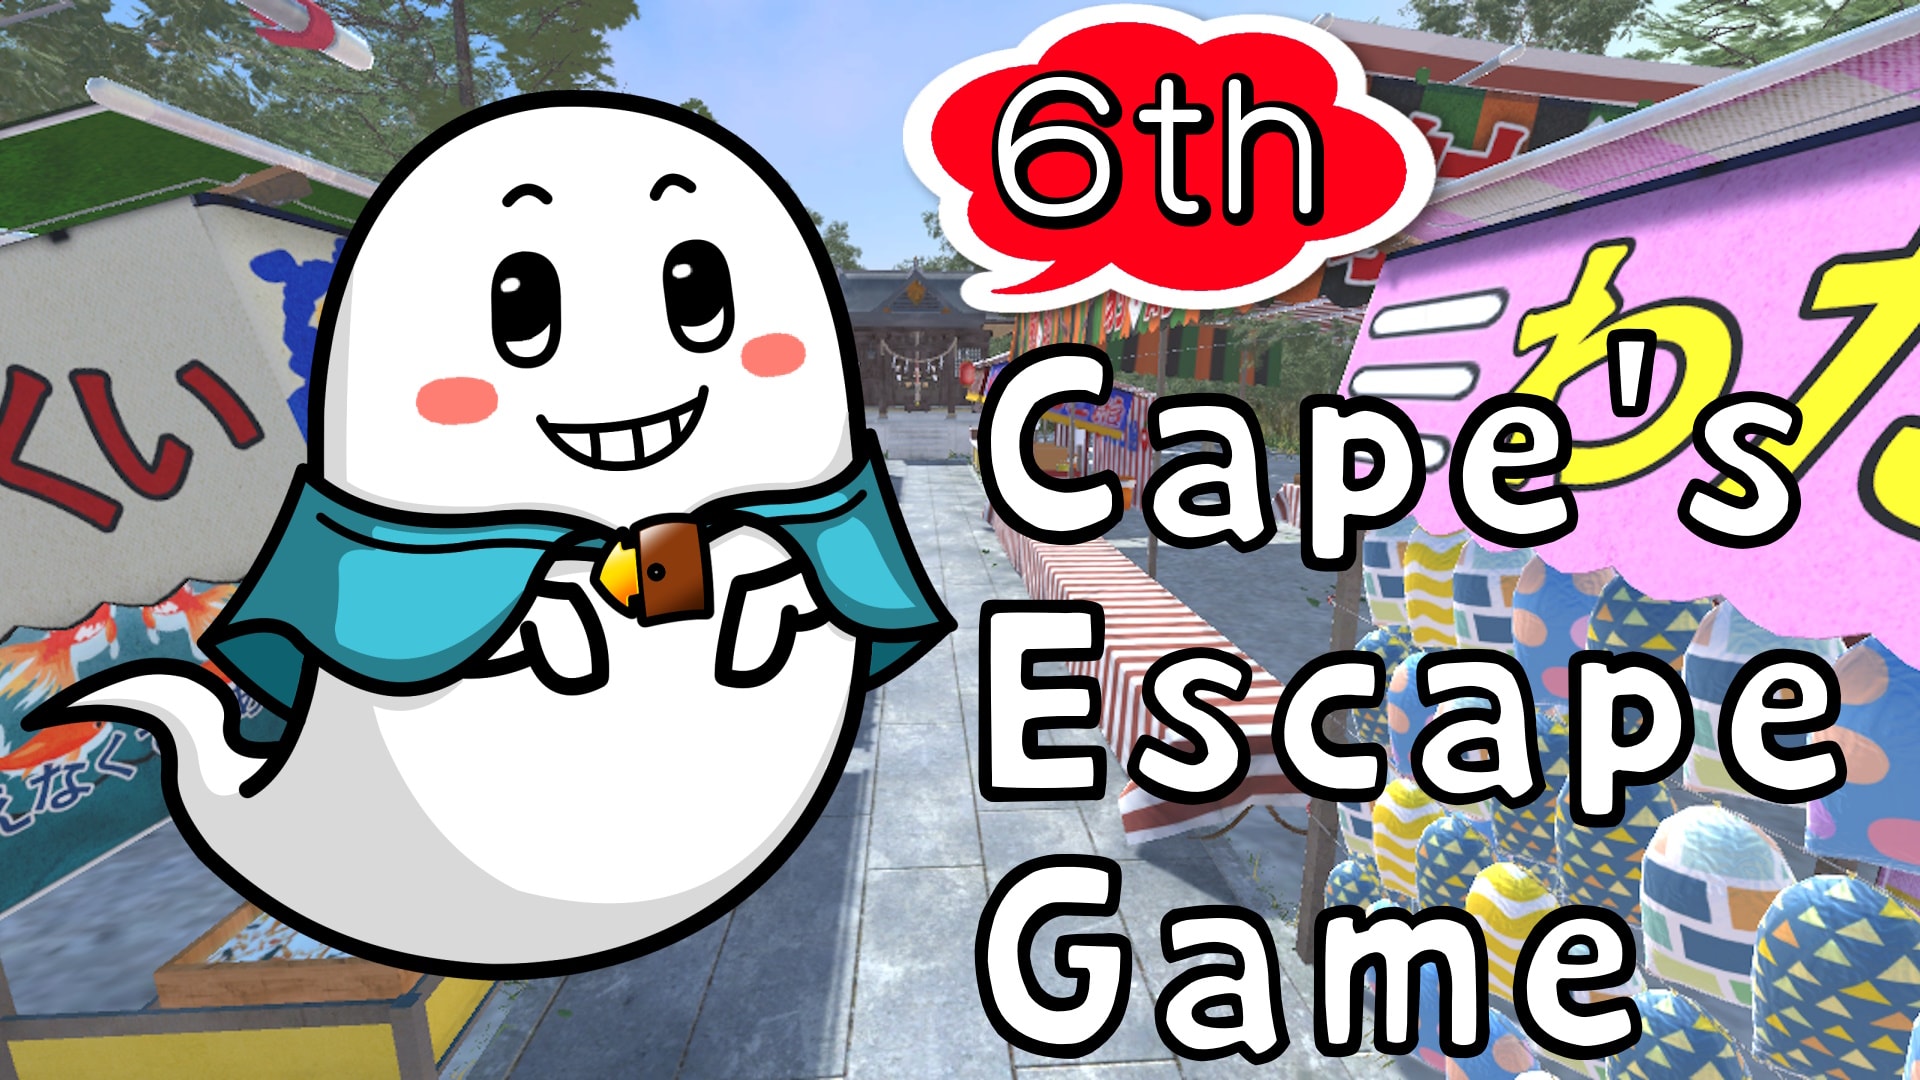 Cape's Escape Game 6ème salle